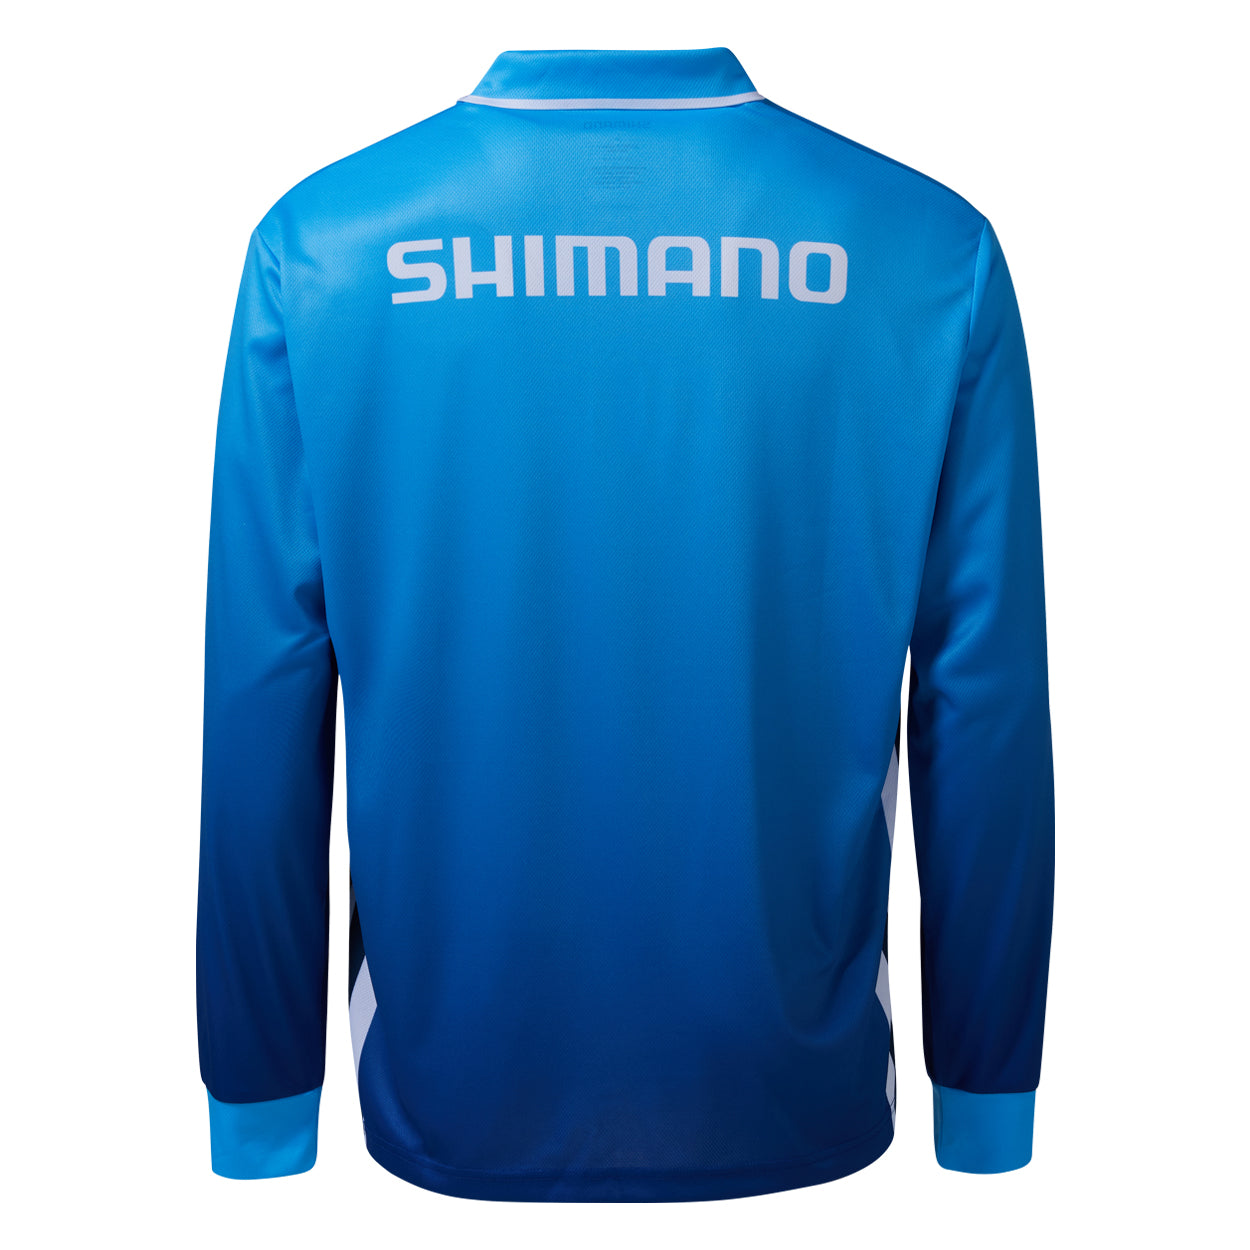 Shimano Corporate Sublimated Long Sleeve Fishing Jersey Shirt